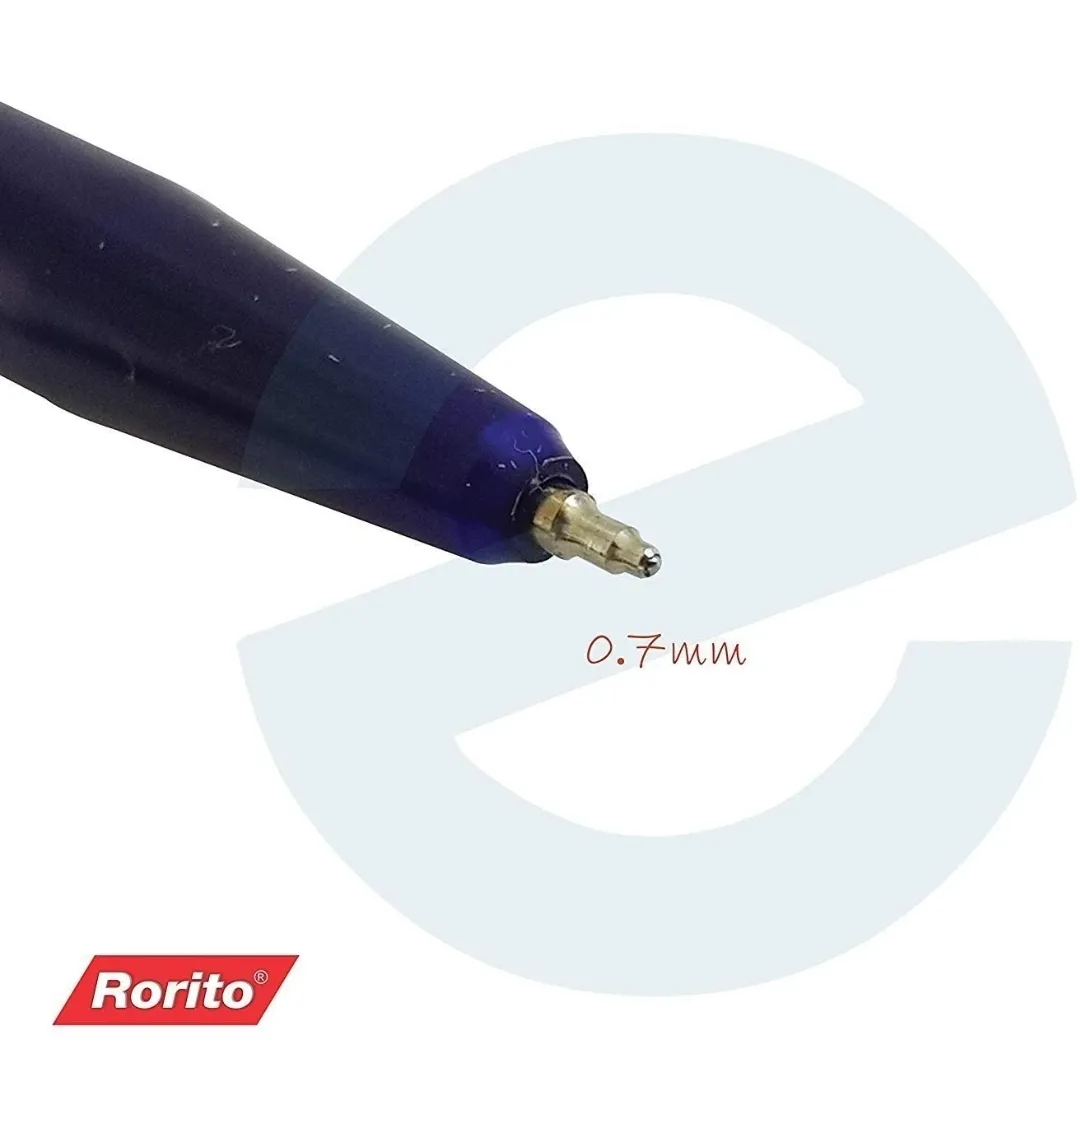 Rorito Jottek Classic Retractable Pen (Blue) - Pack of 10